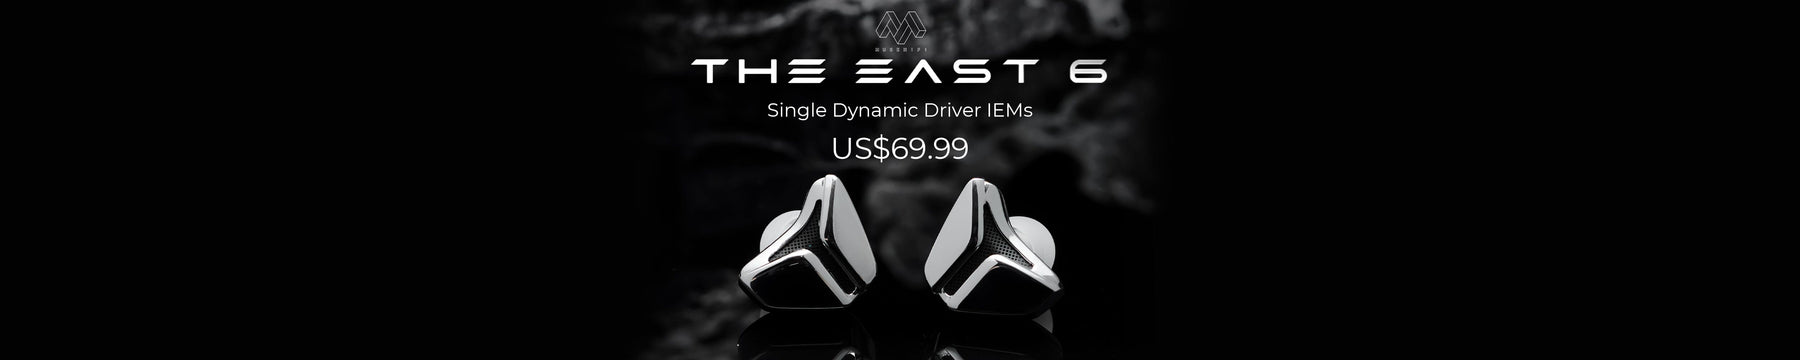 Muse HiFi East 6 10mm Tesla-Grade Dual-Magnetic Dual-Cavity Dynamic Driver IEMs